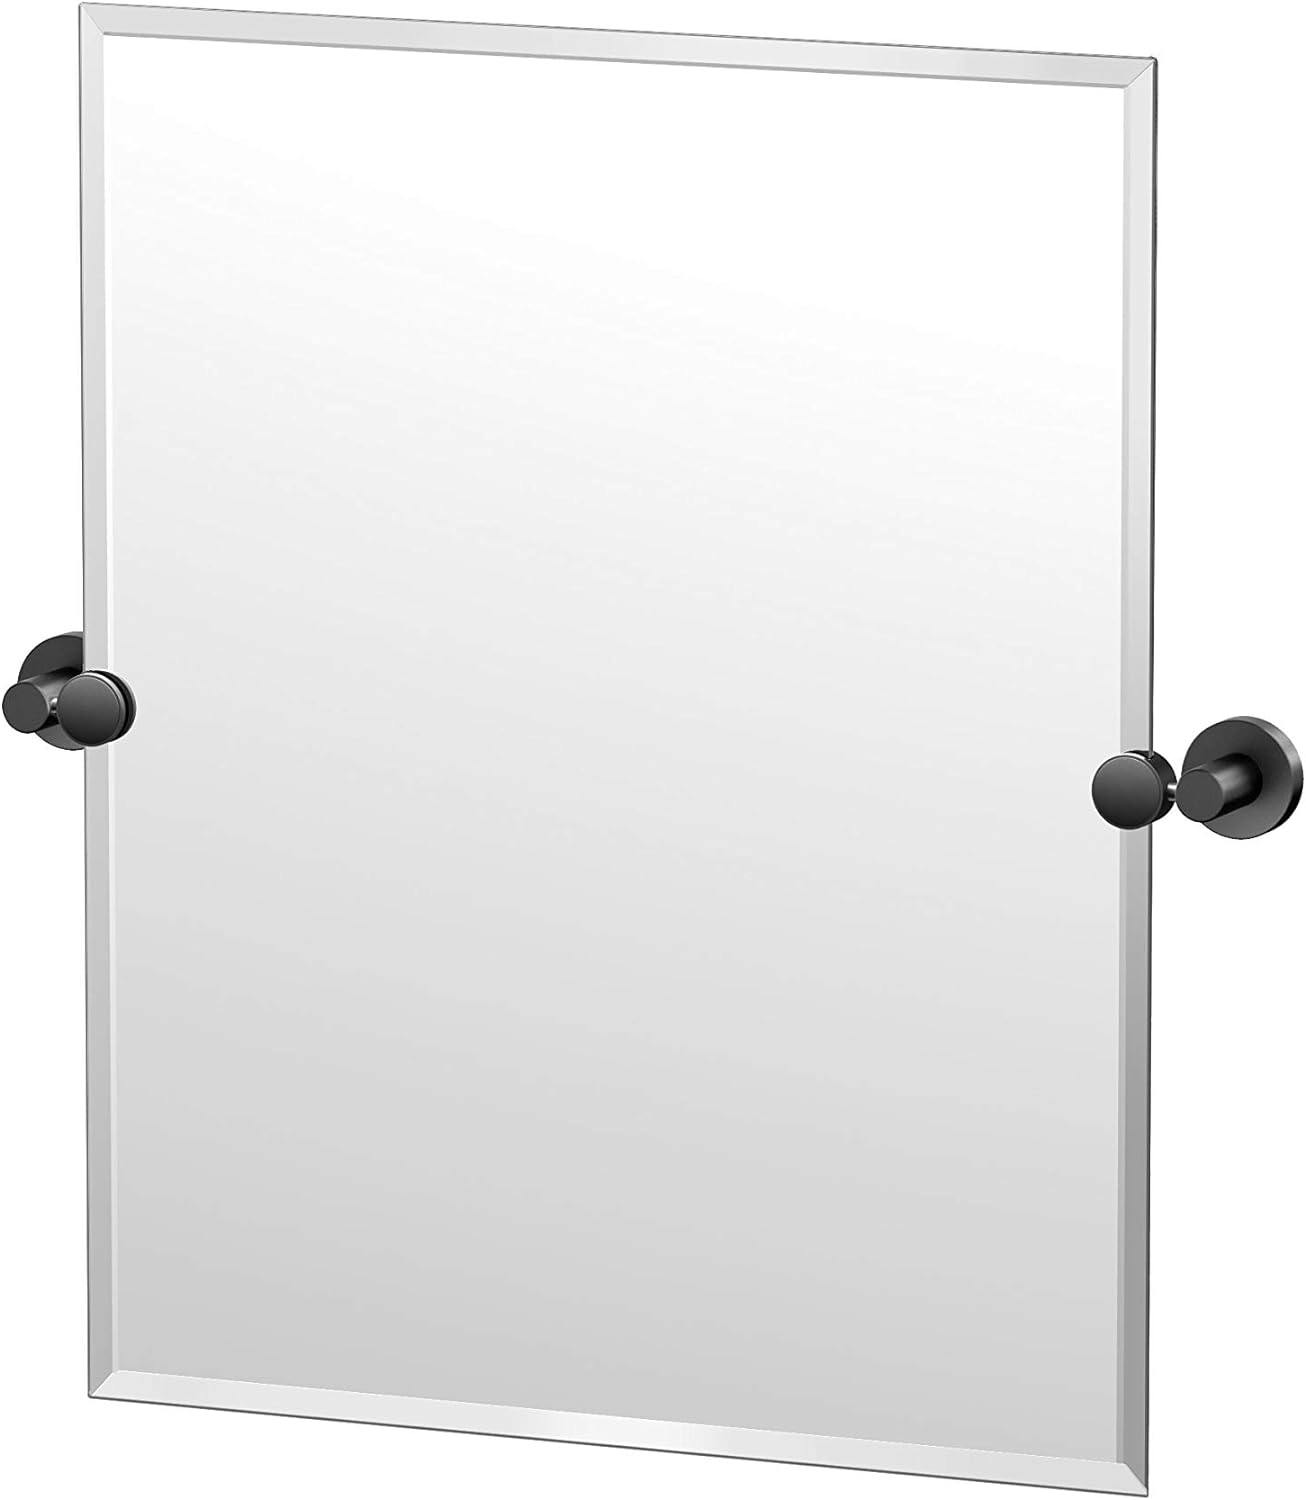 Sleek Frameless Matte Black Rectangular Bathroom Mirror, 24x24 inches